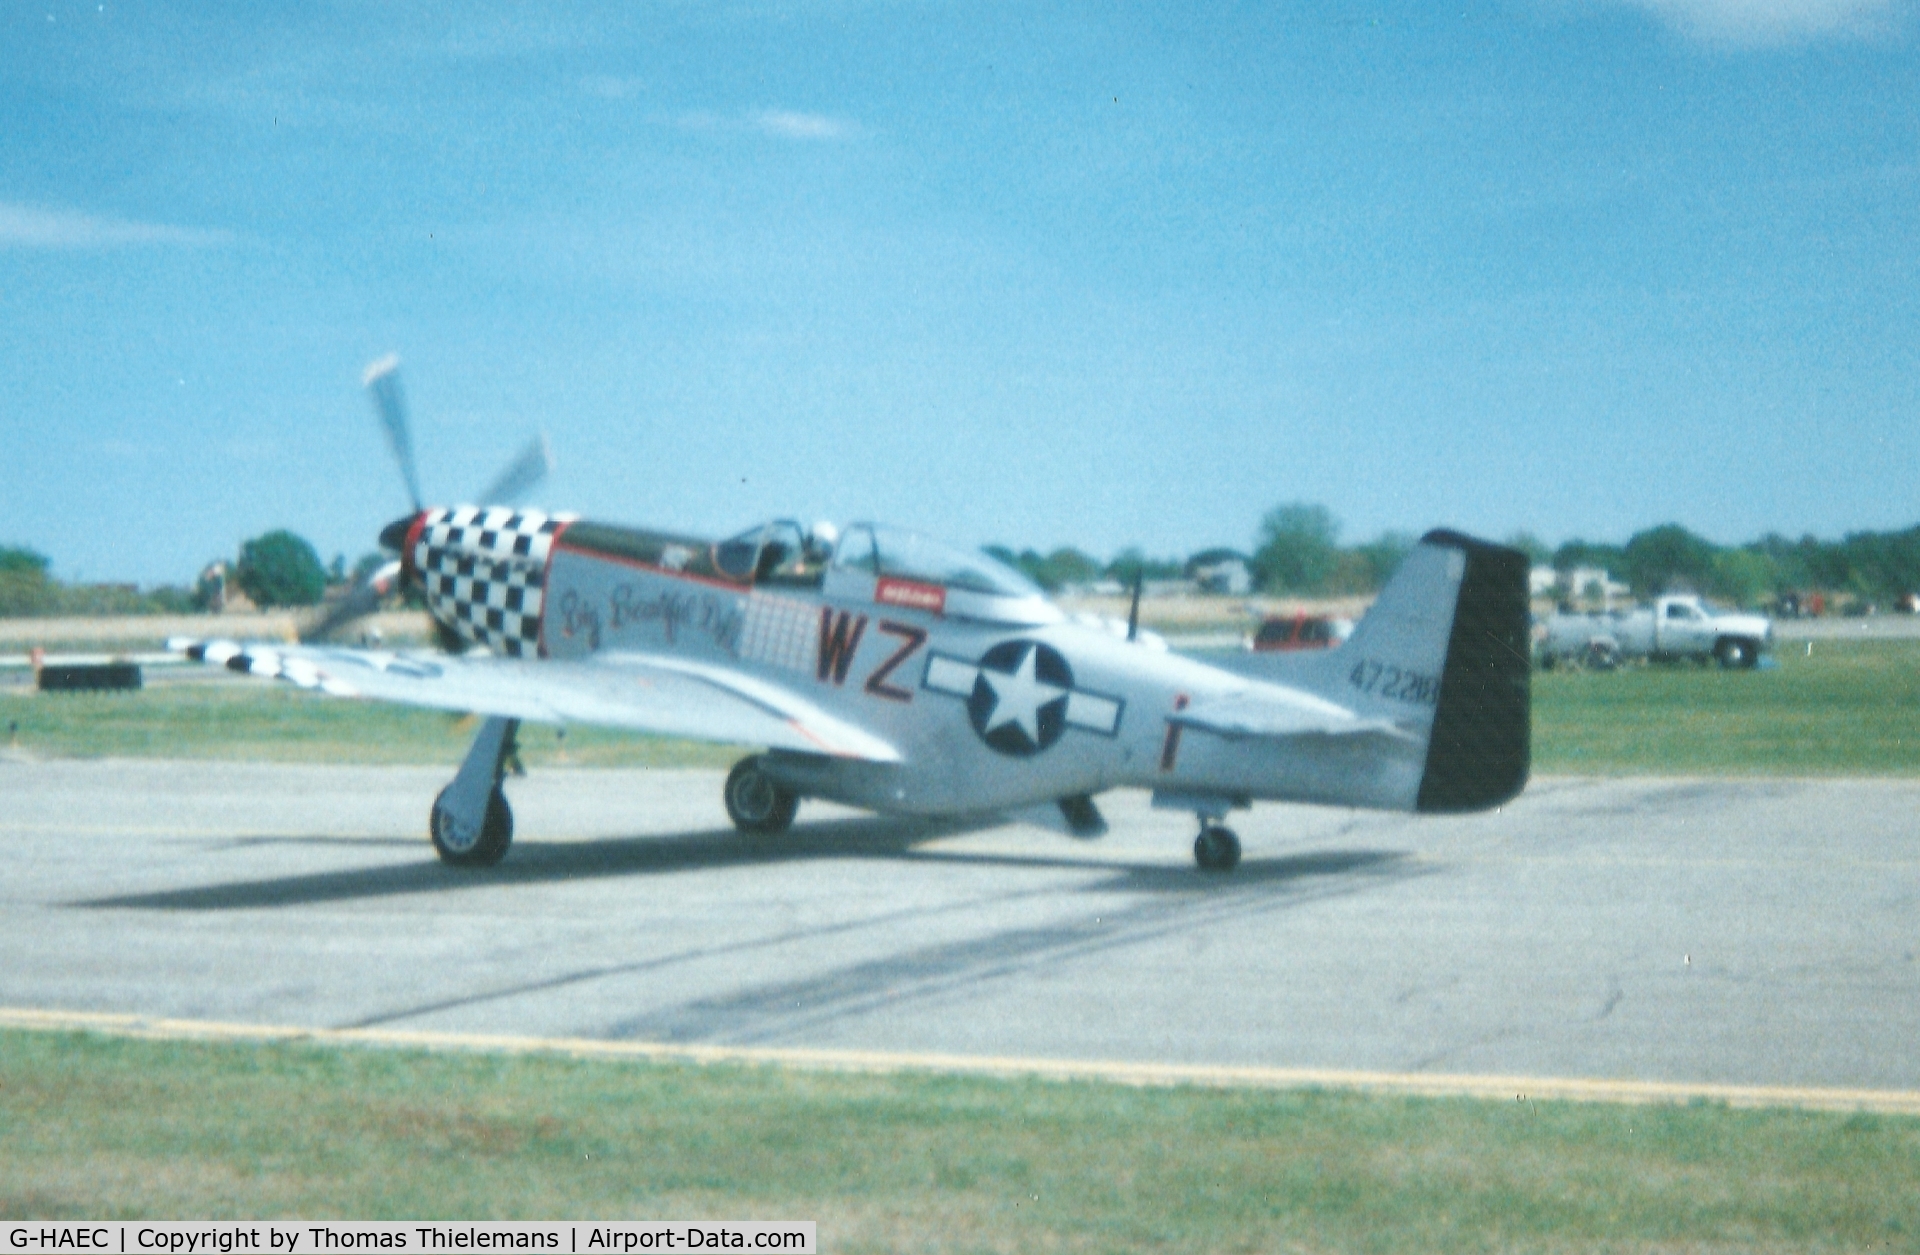 G-HAEC, 1951 Commonwealth CA-18 Mustang 22 (P-51D) C/N CACM-192-1517, airshow